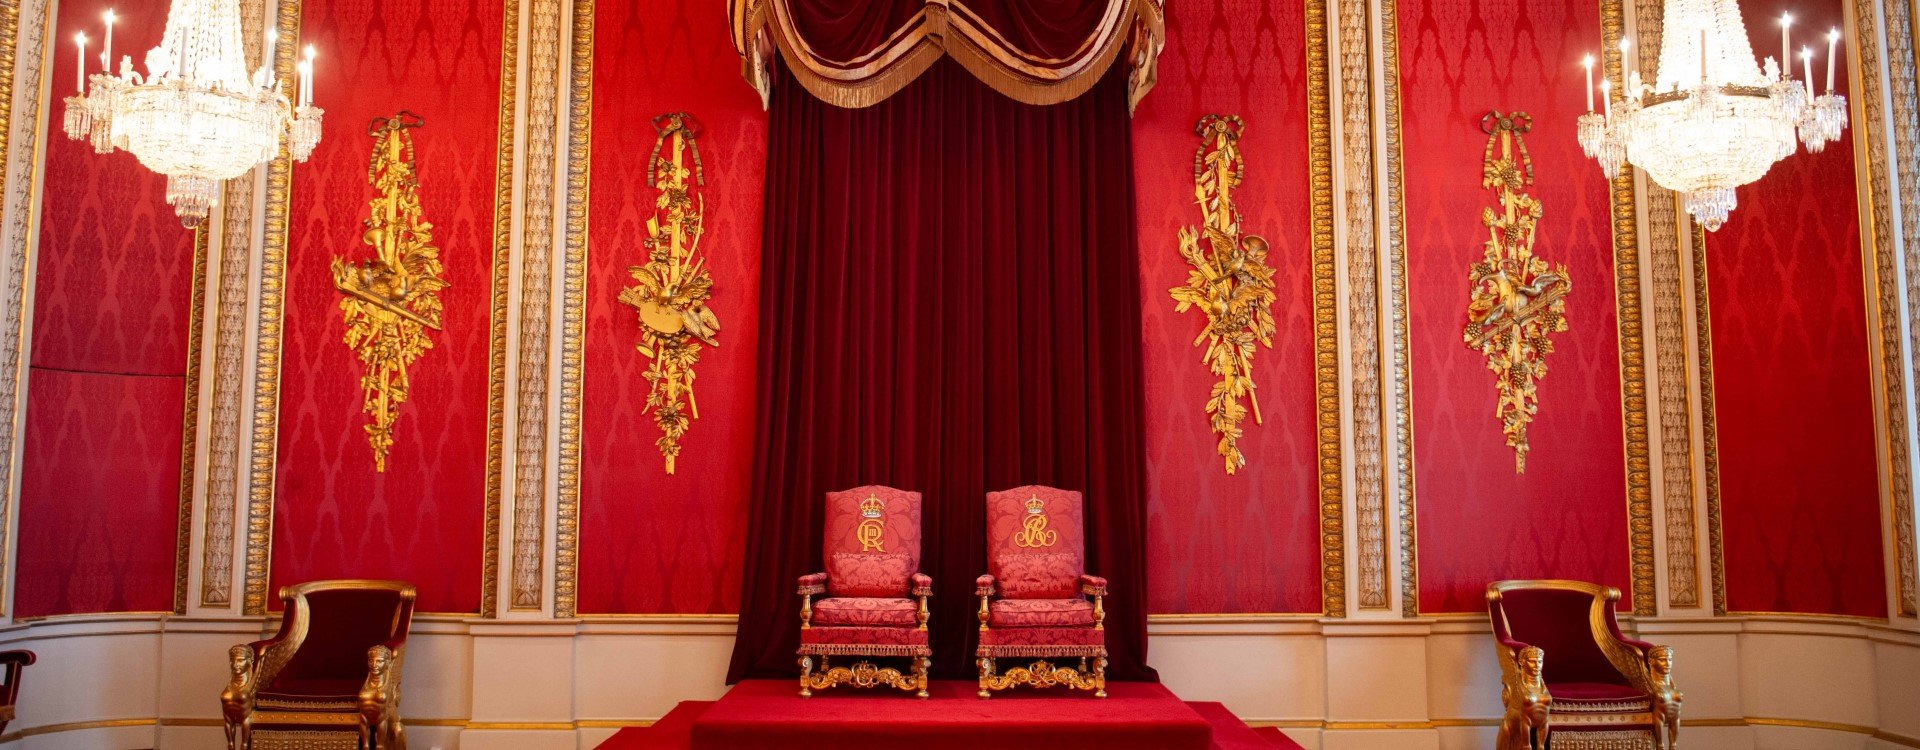 Throne Room, Buckingham Palace